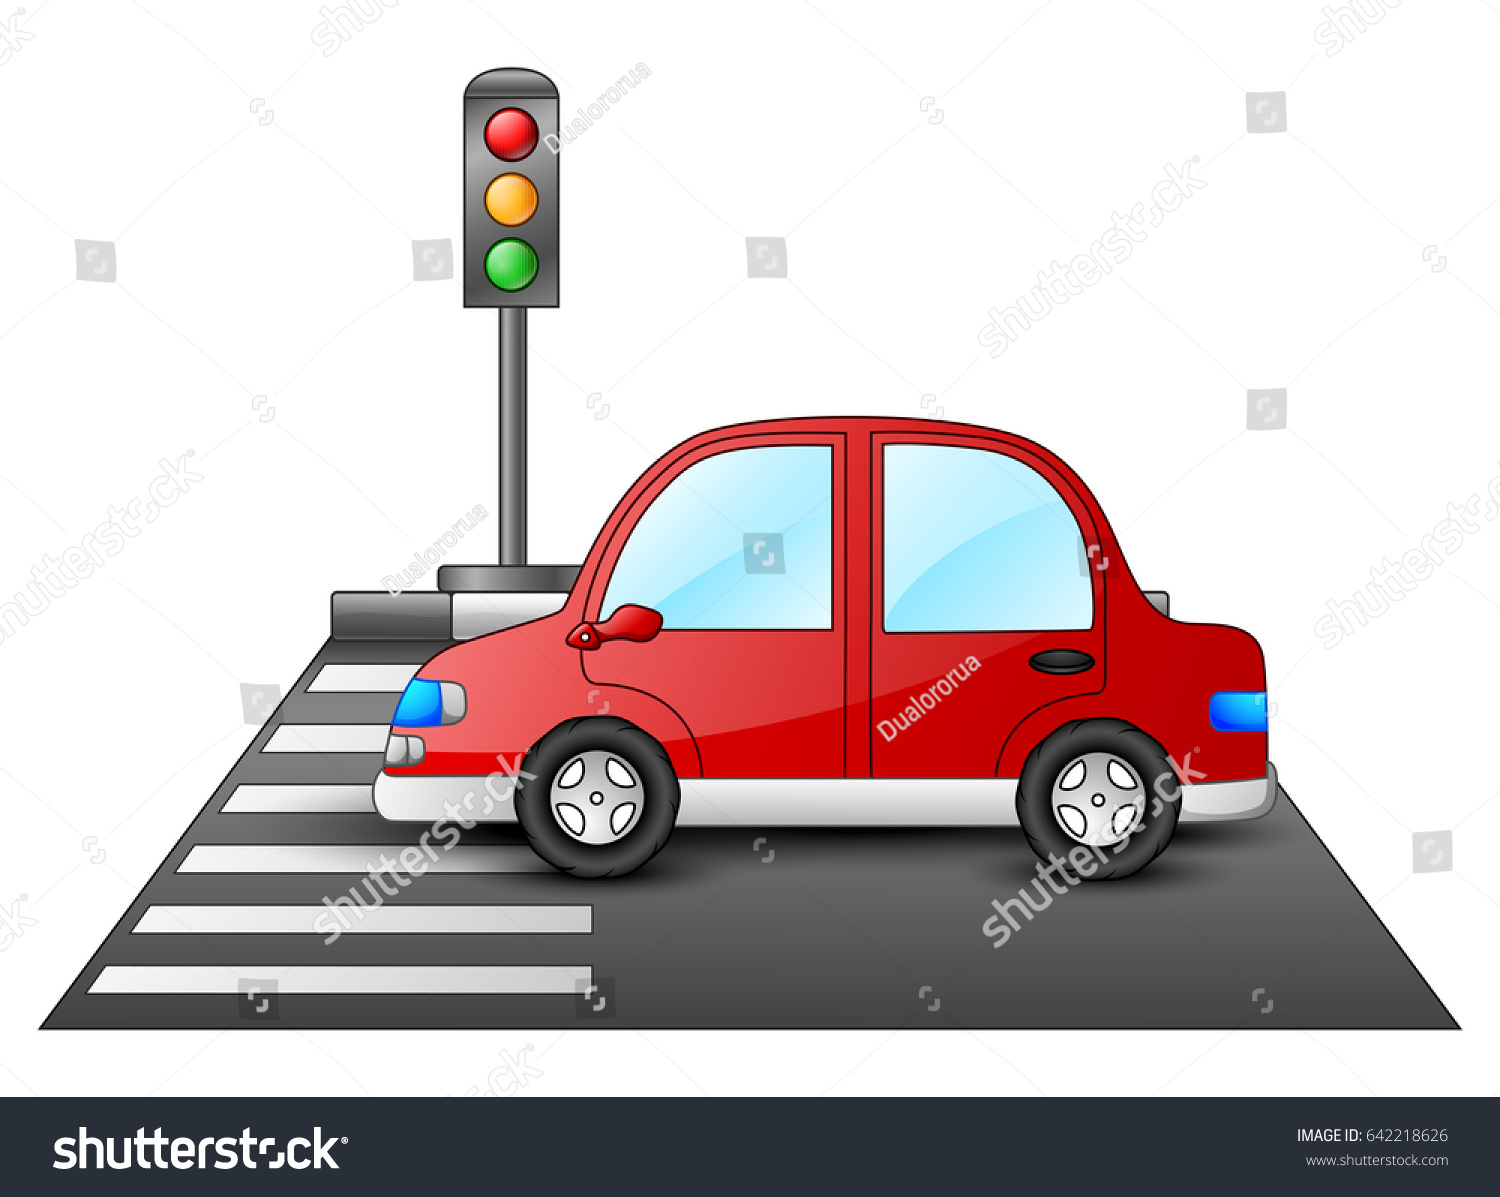 Авто на светофоре рисунок